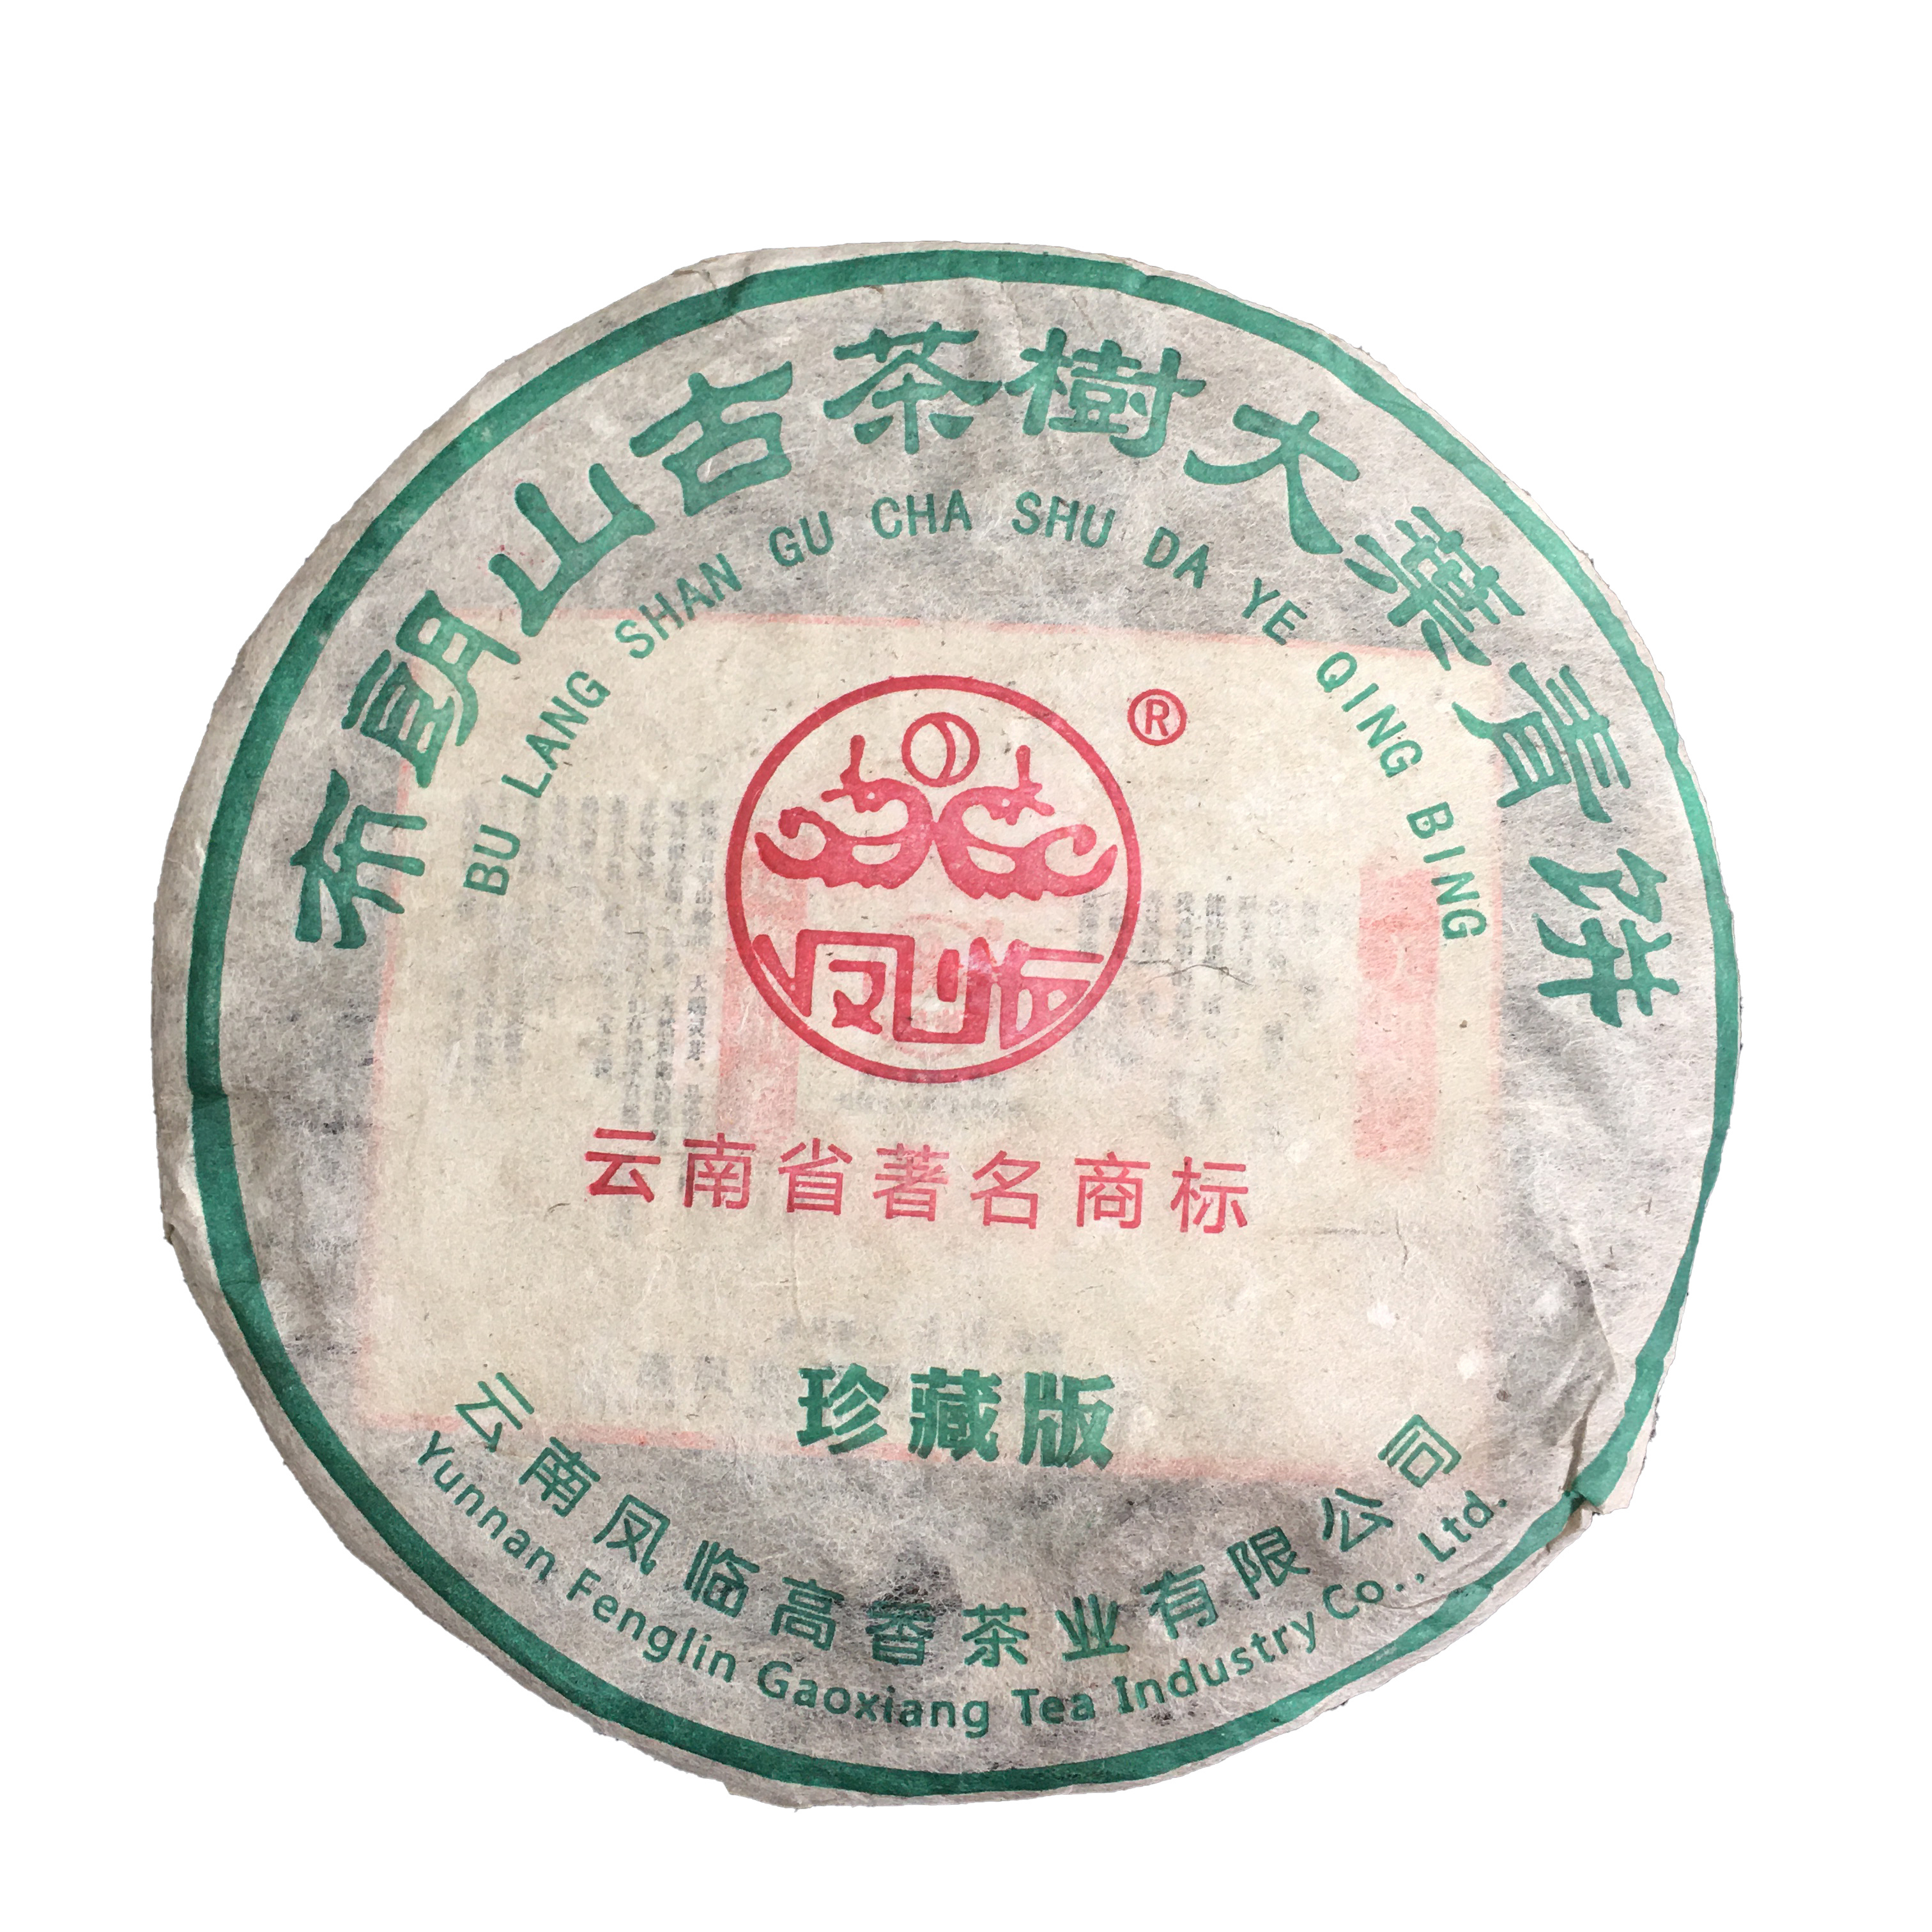 2003年 凤临布朗山古茶珍藏版 烟香味浓  茶味厚重 357克/饼